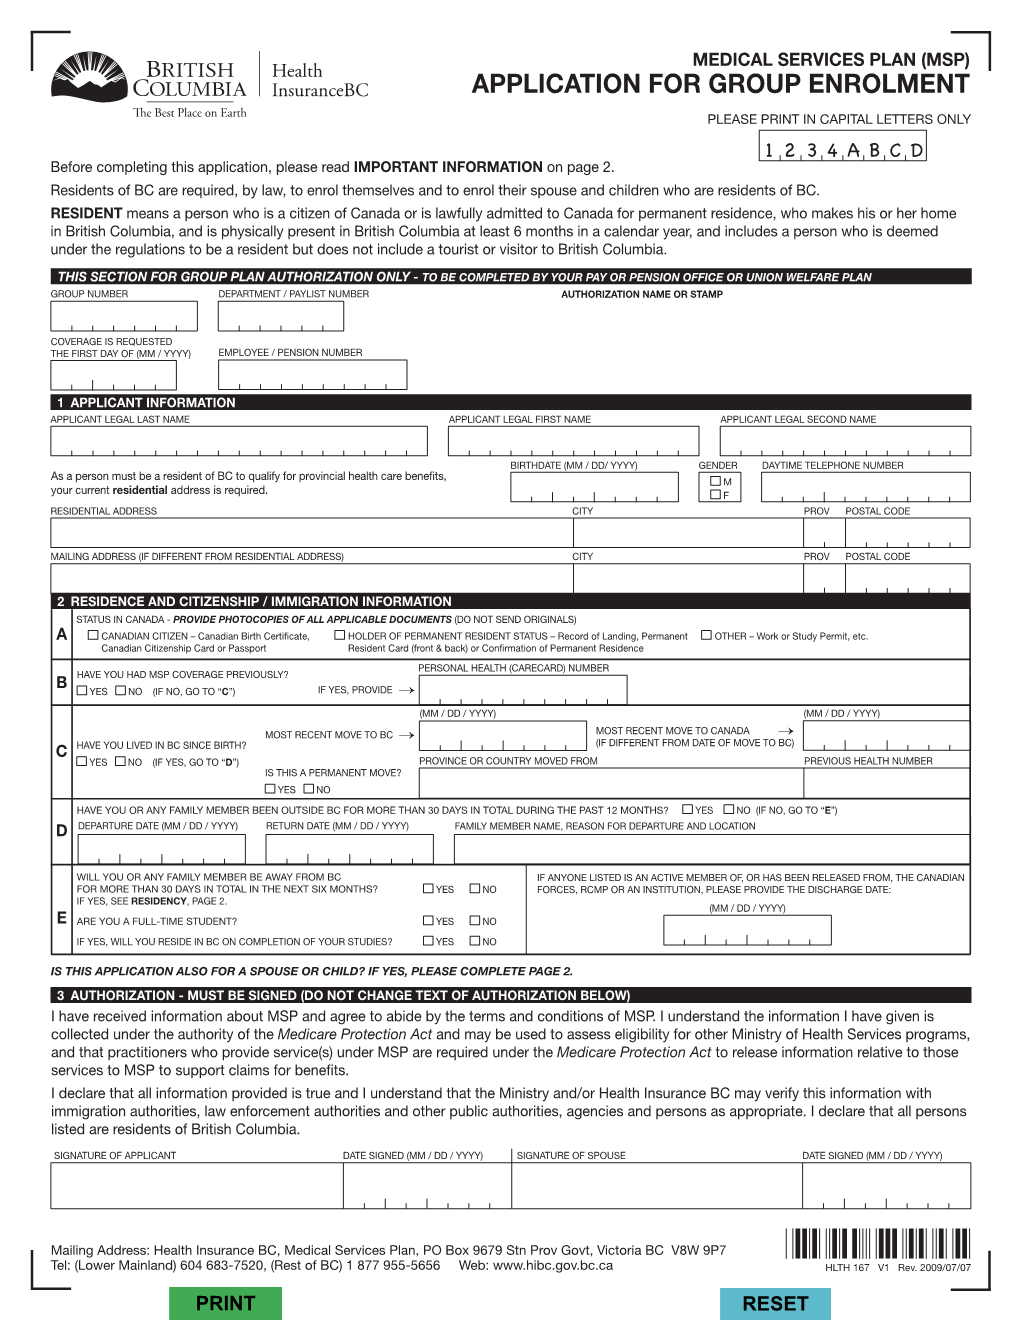 MSP Application for Group Enrolment